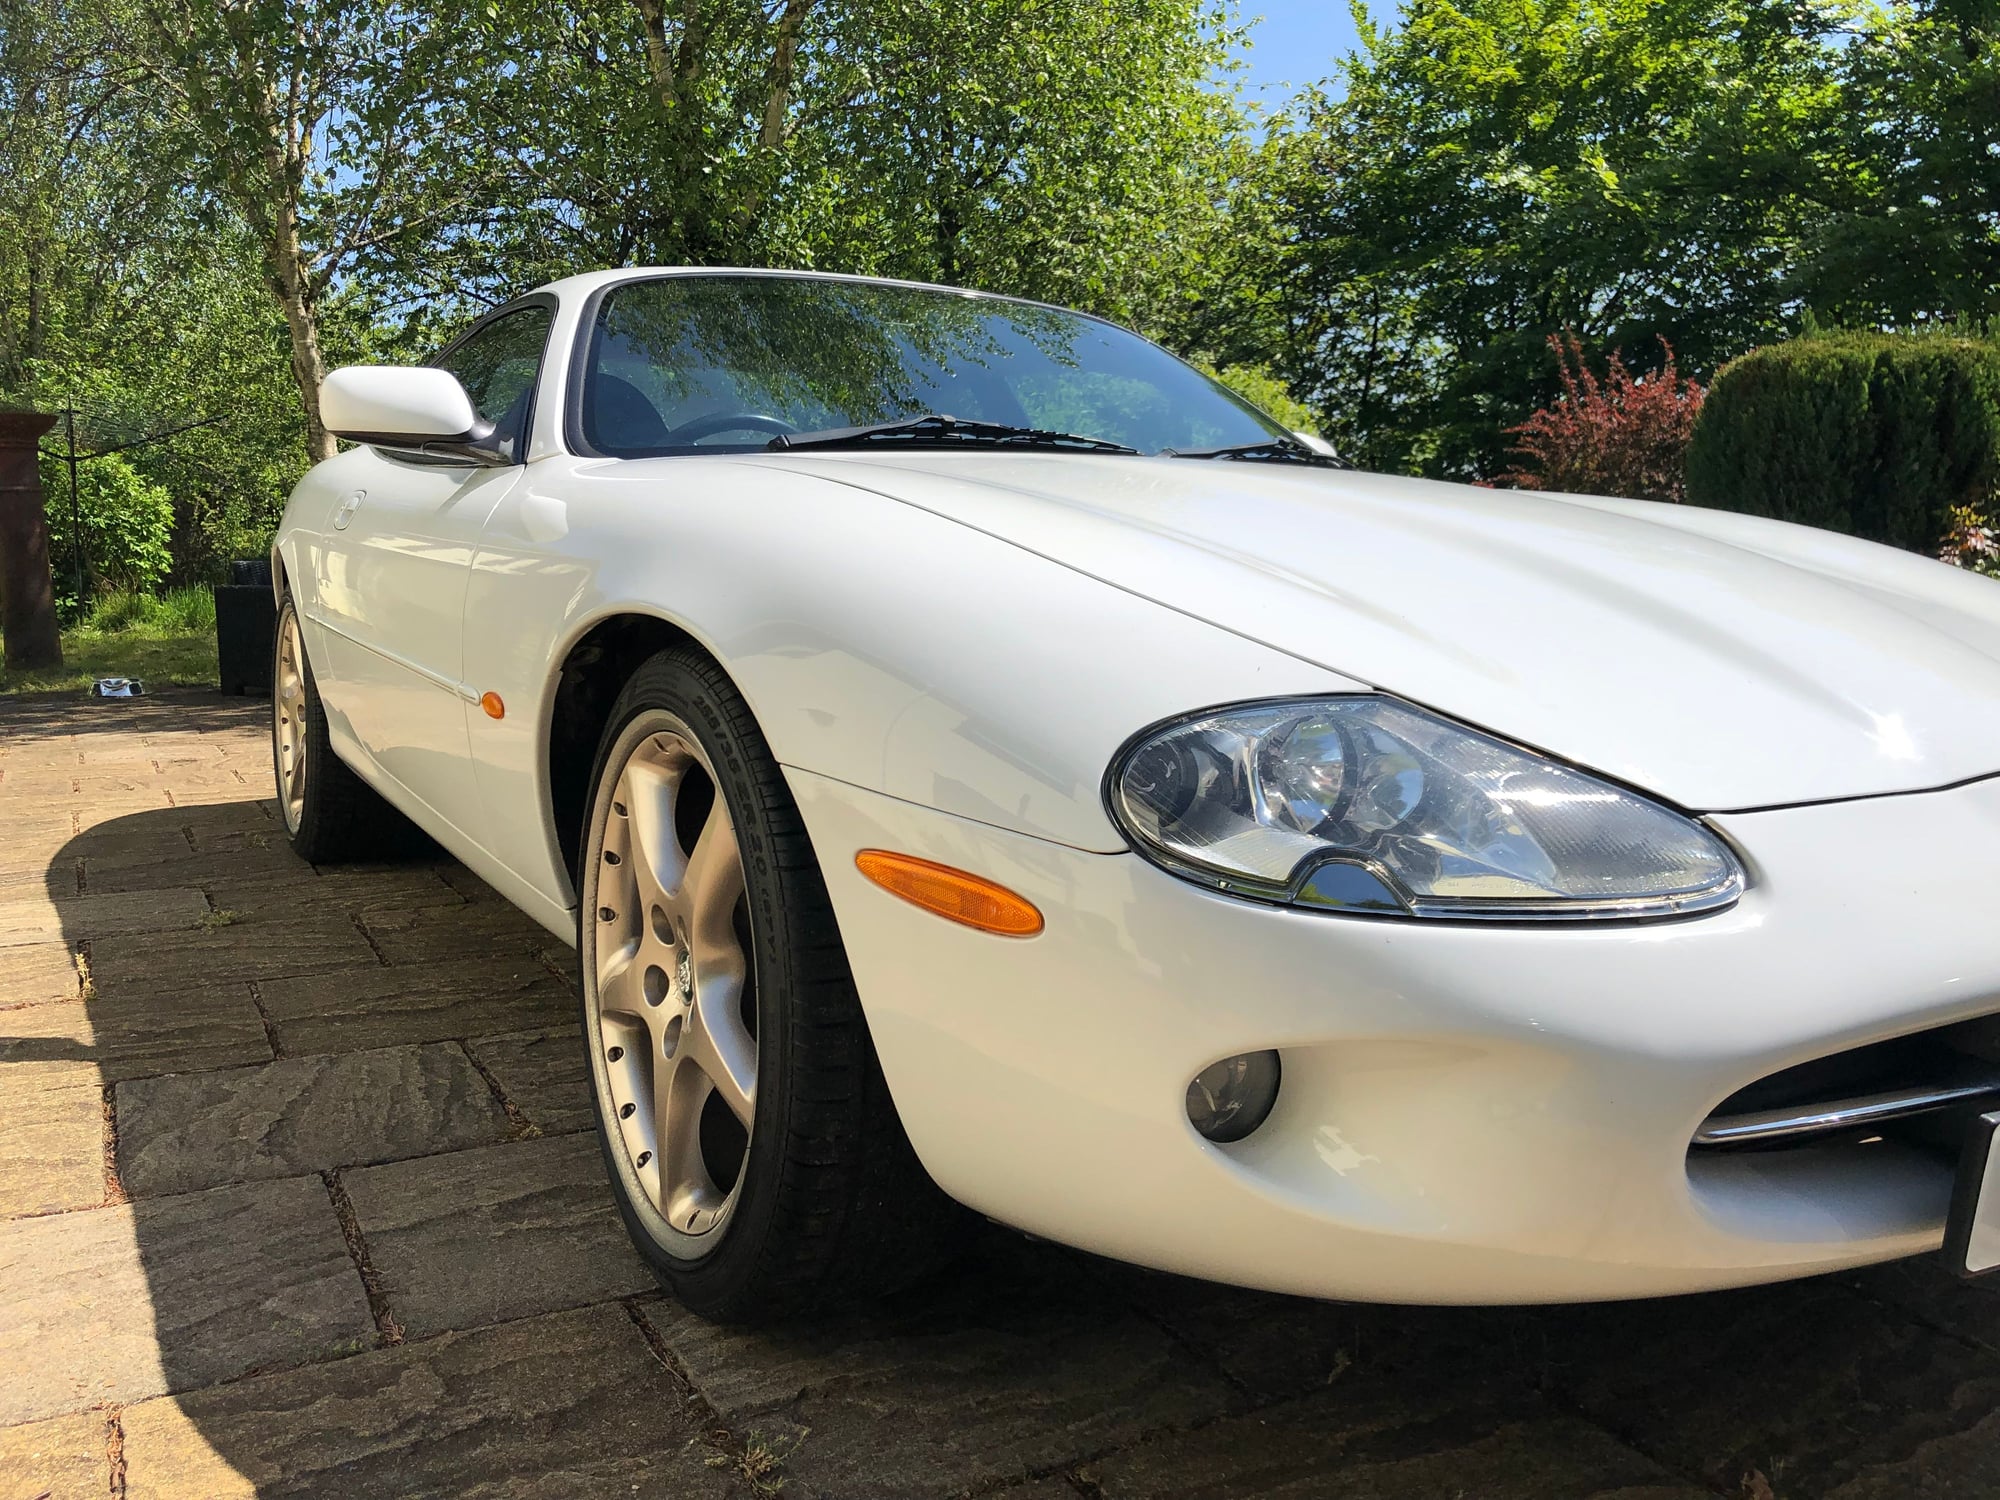 1994 Jaguar XJS - Private Jaguar Collection for sale in UK - Used - VIN 123456890 - 100 Miles - Cardiff CF72, United Kingdom